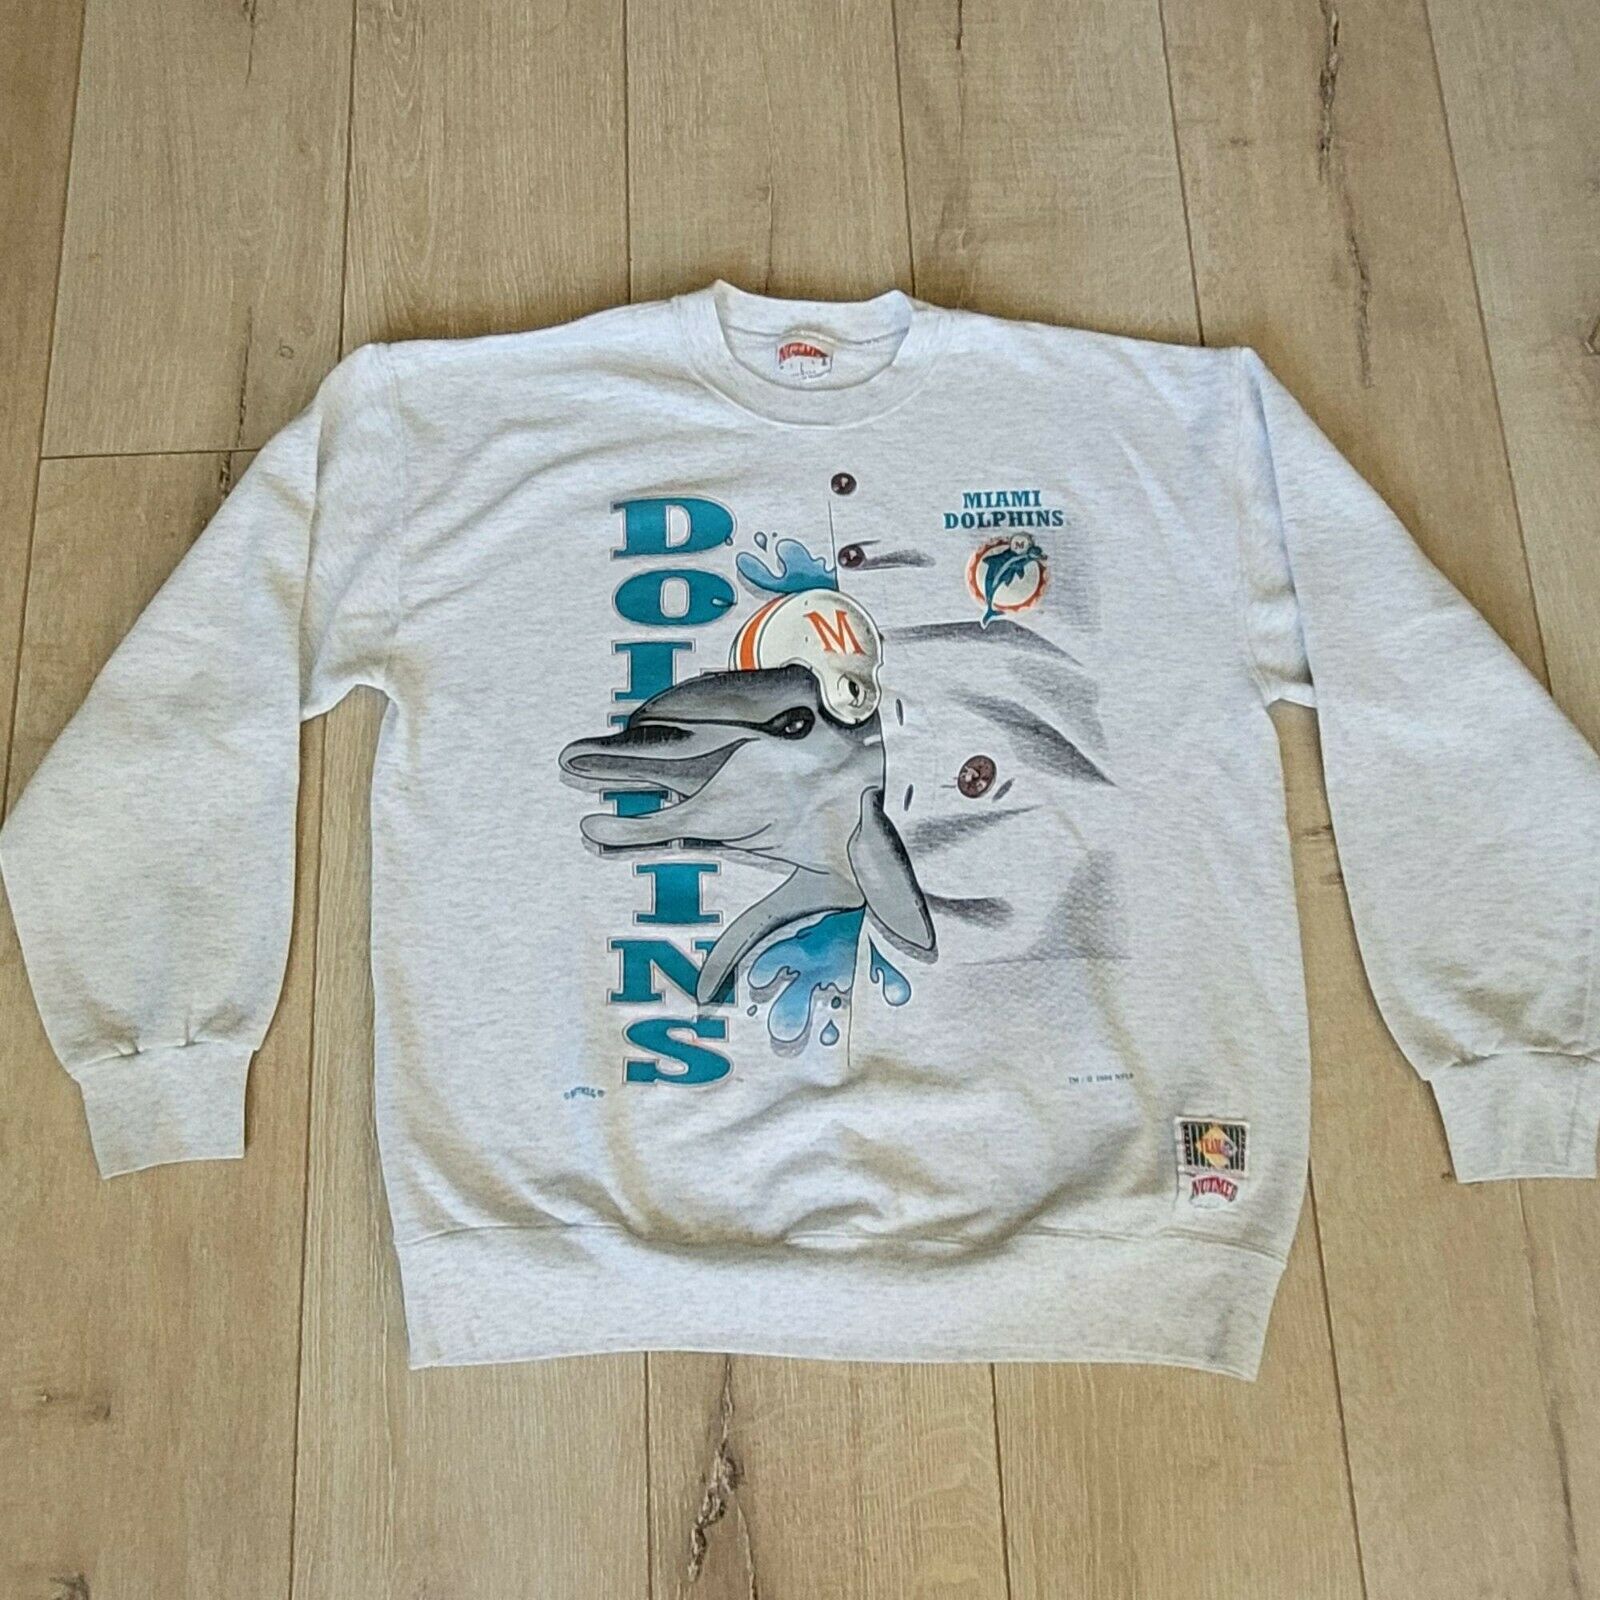 vintage dolphins sweatshirt